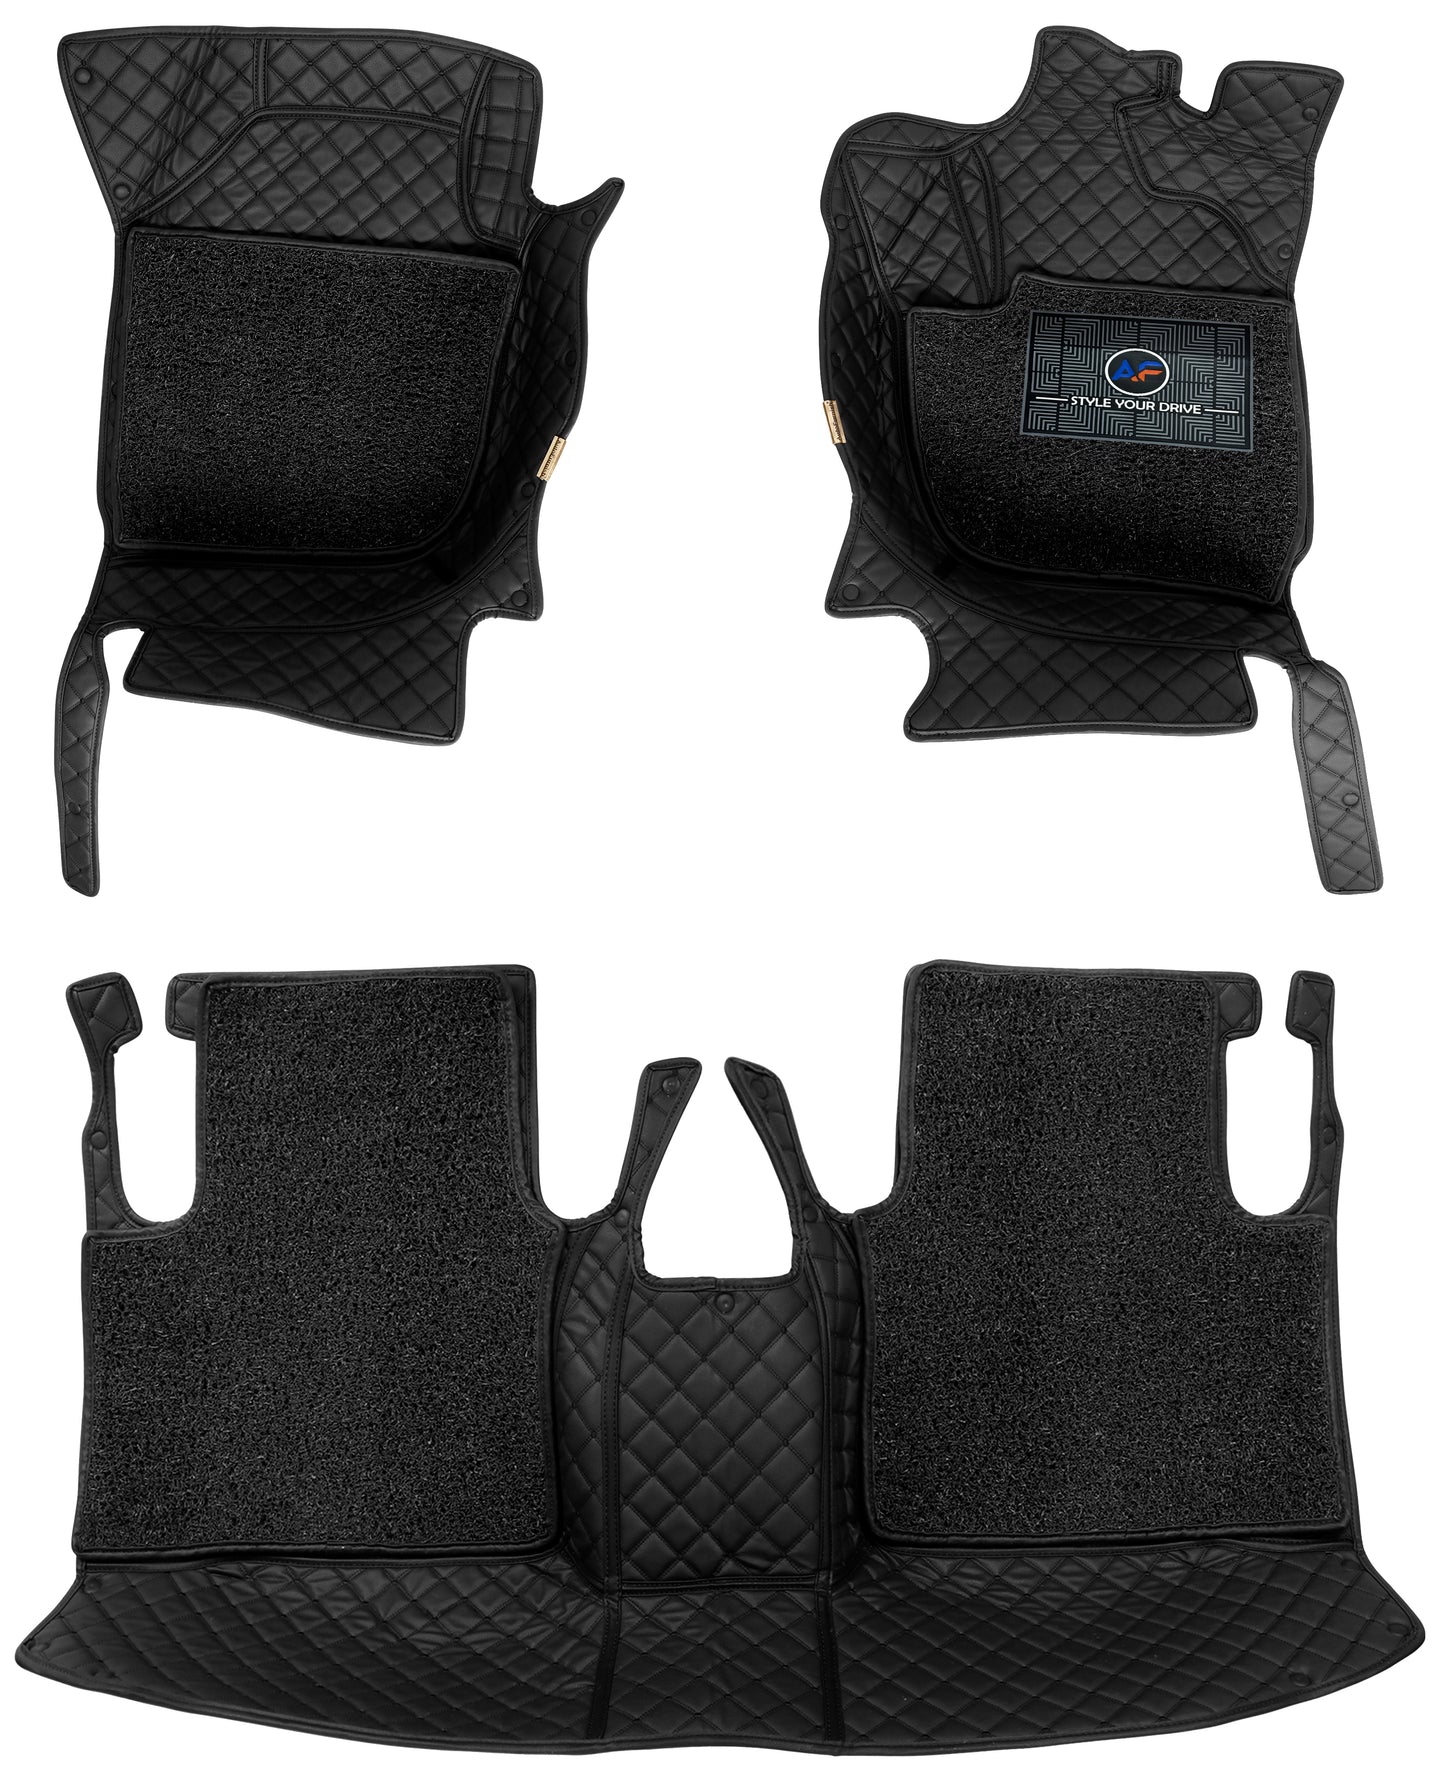 Tata Safari (7 Seater) 2023-7D Luxury Car Mat, All Weather Proof, Anti-Skid, 100% Waterproof & Odorless with Unique Diamond Fish Design (24mm Luxury PU Leather, 2 Rows)